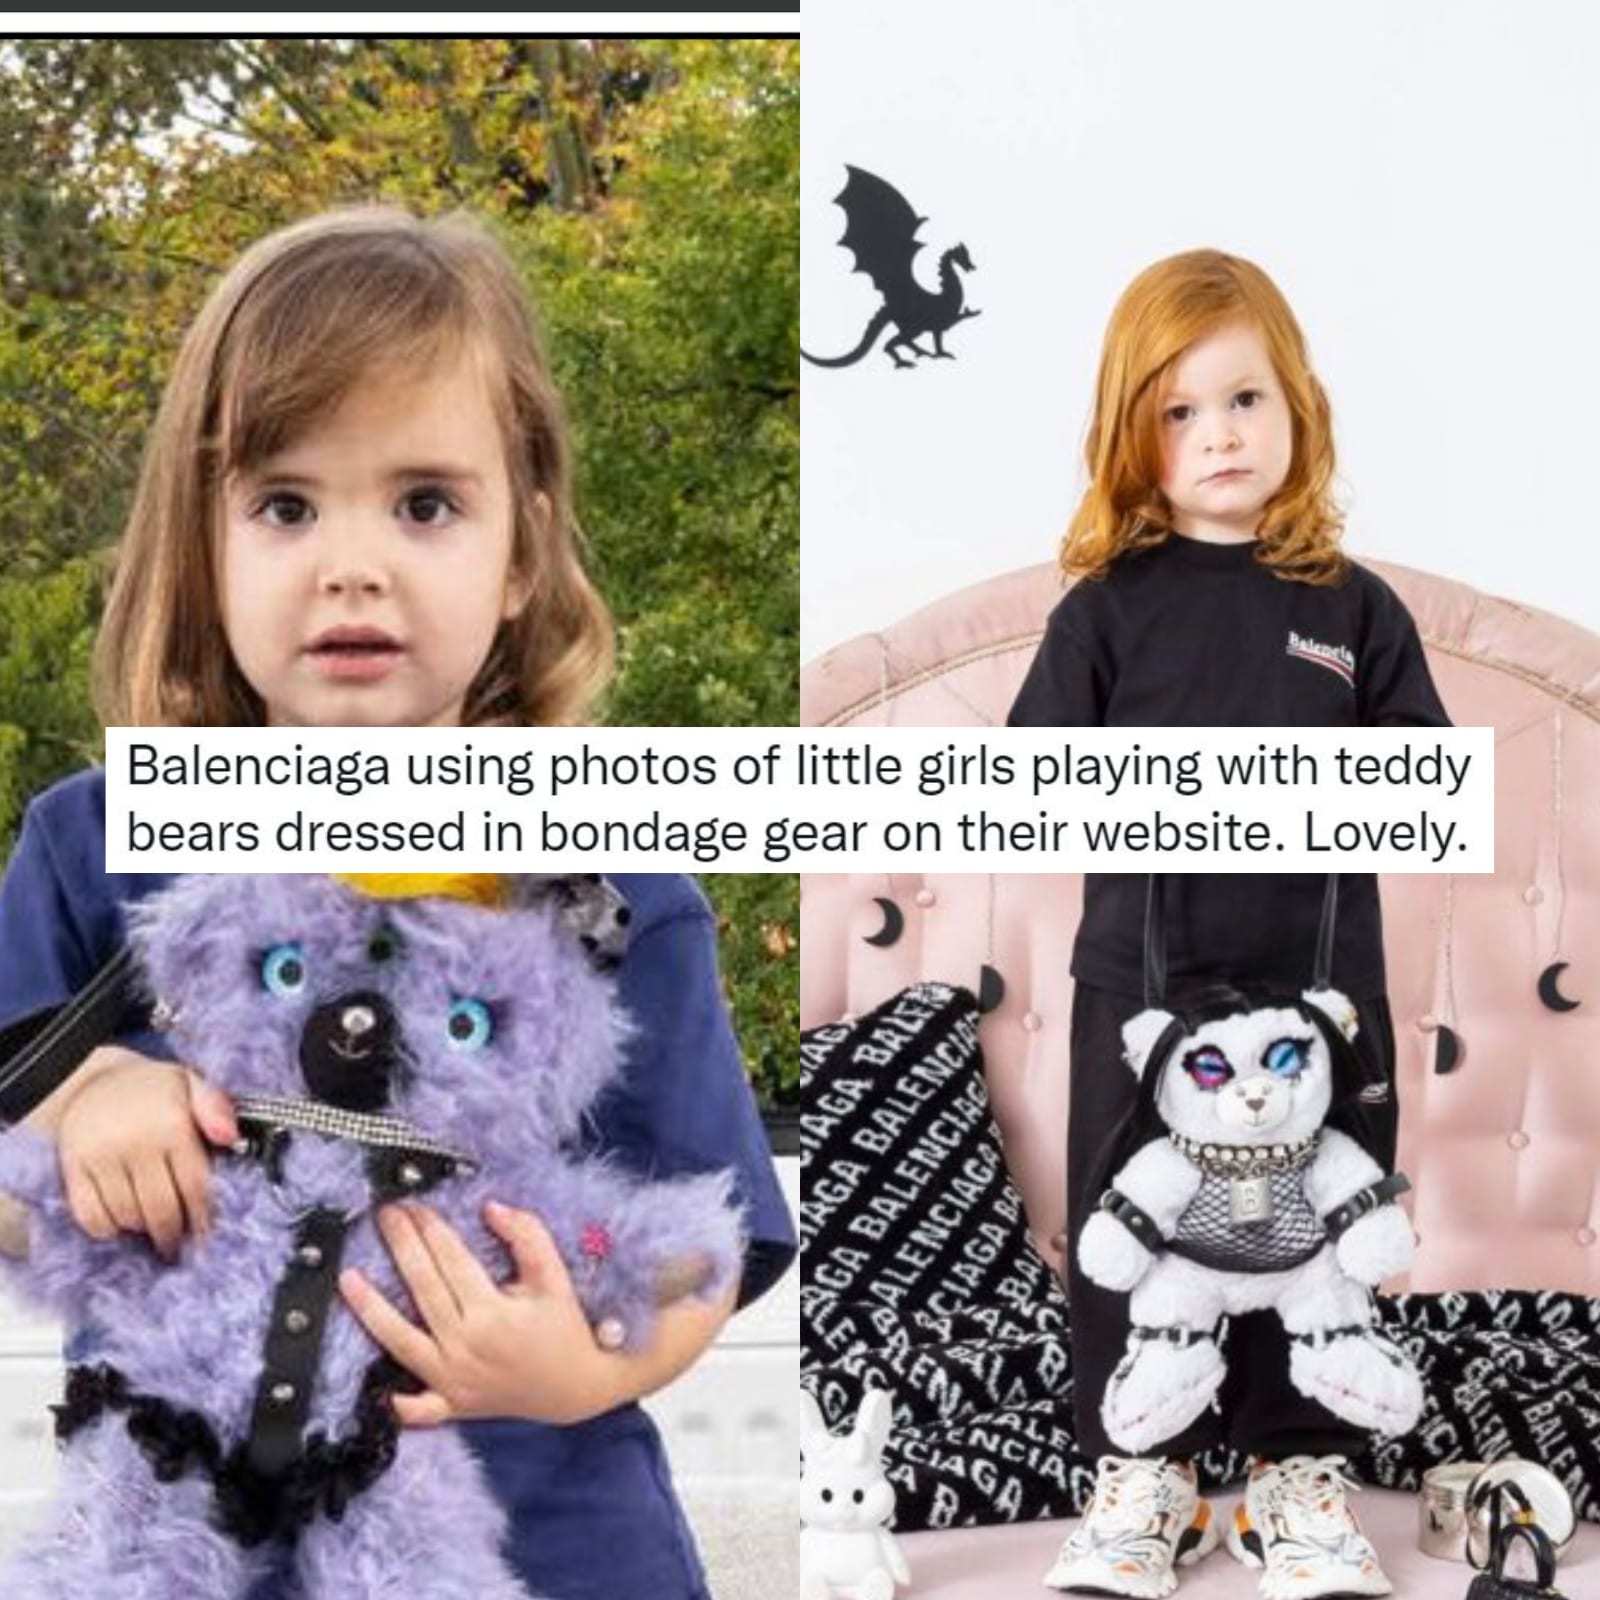 Balenciaga Slammed Over 'Disturbing' Ads Showing Little Girls With Teddies  in Bondage Gear - News18